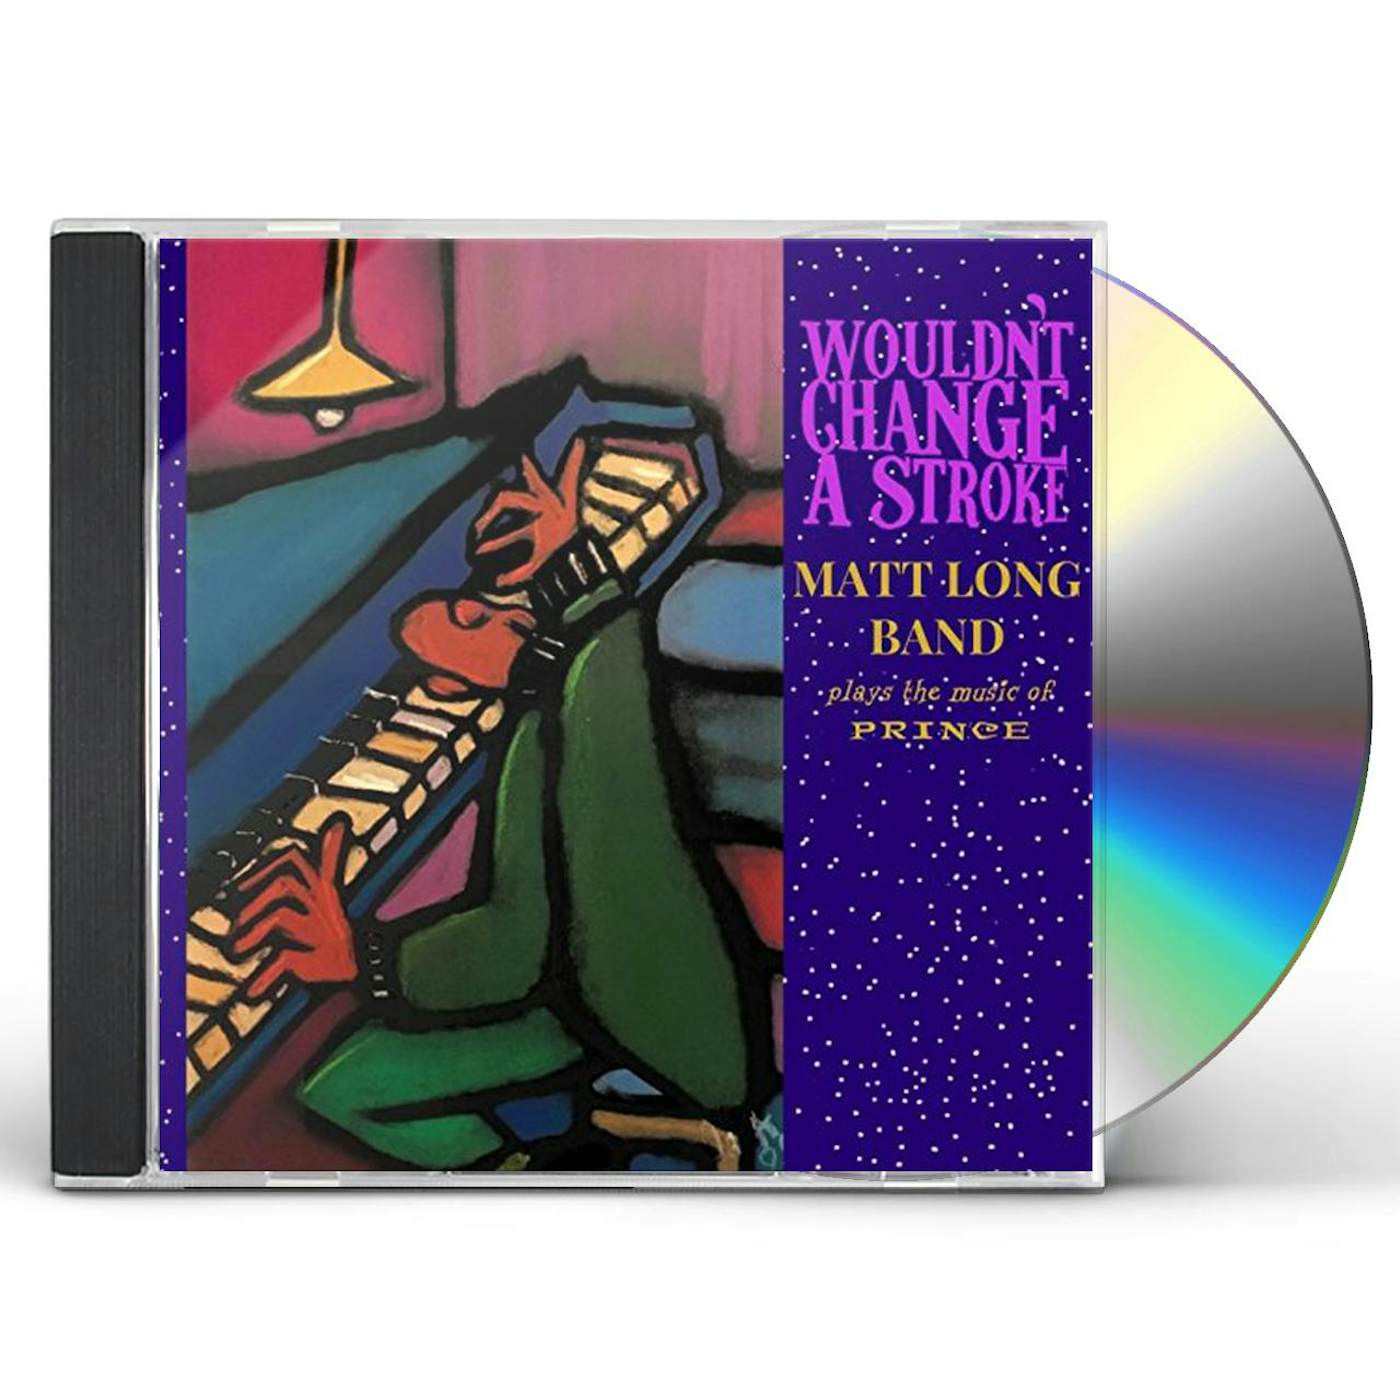 WOULDN'T CHANGE A STROKE: MATT LONG BAND CD